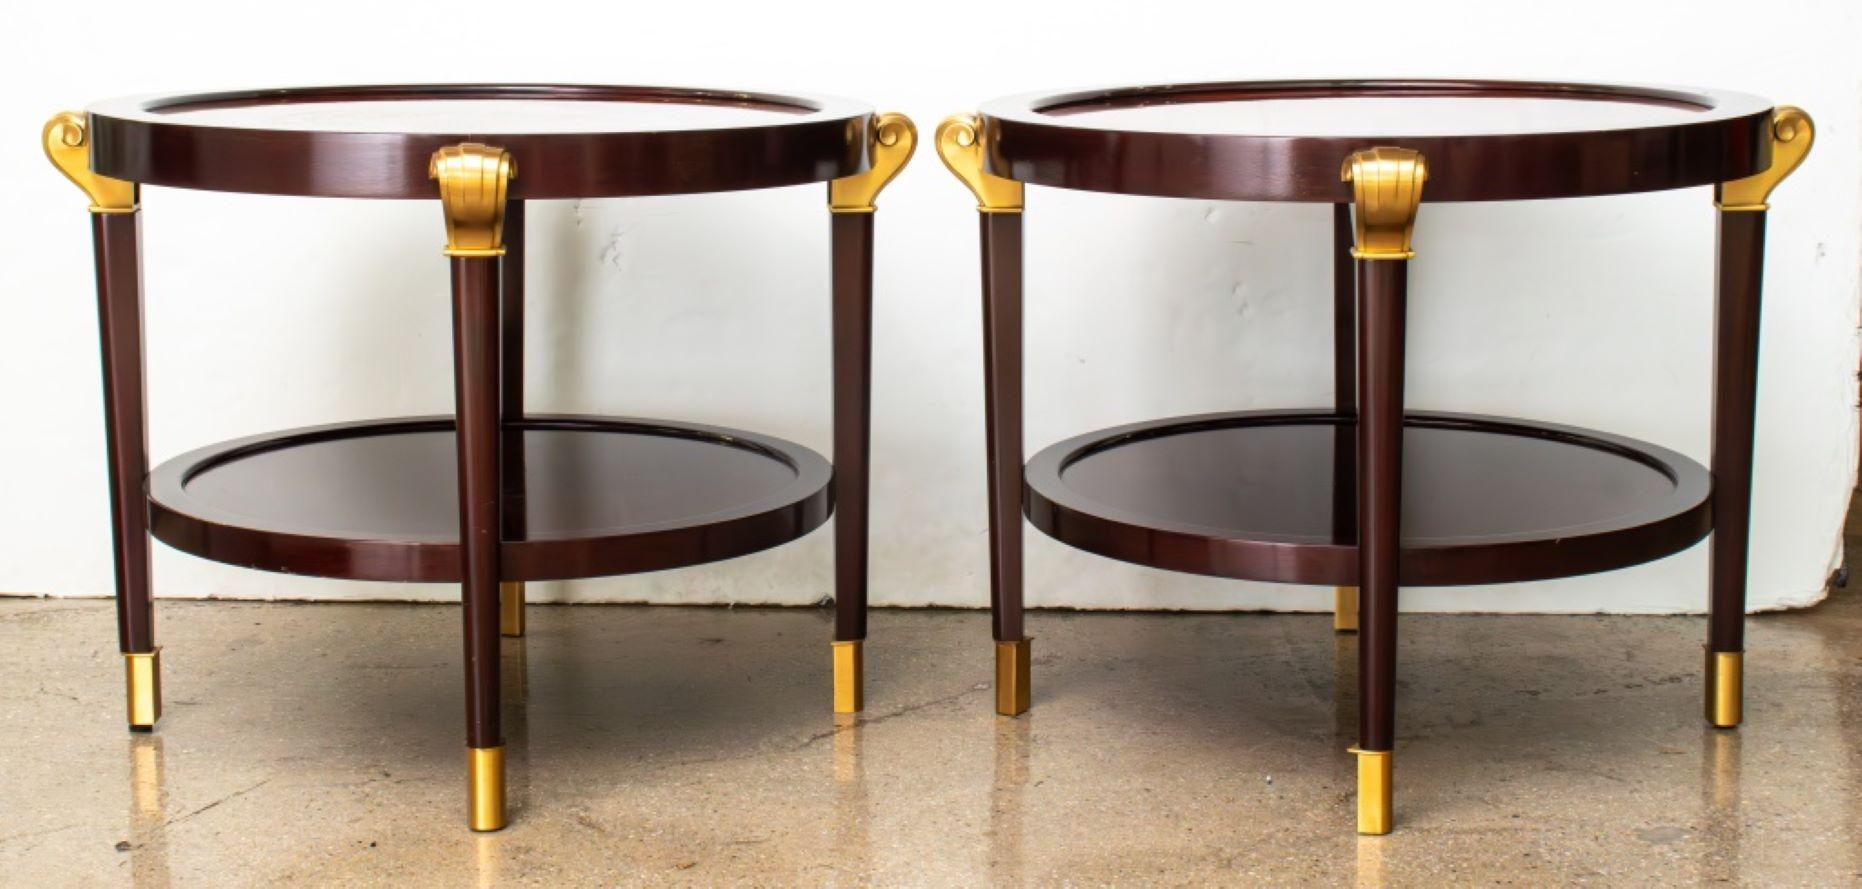 Art Deco Revival Round End Tables, Pair For Sale 4